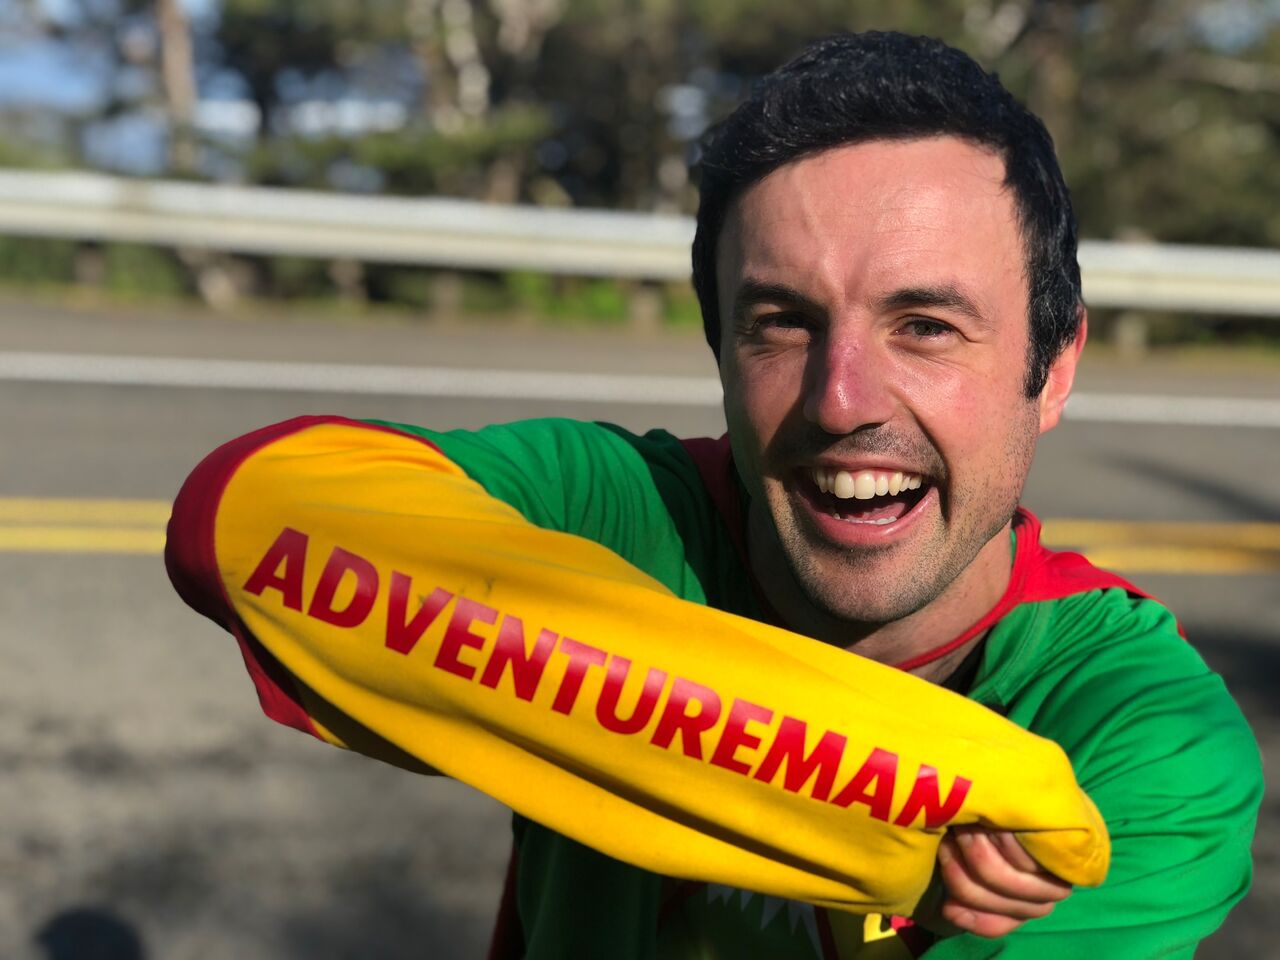 Jamie is running as his Adventureman alter ego(Jamie McDonald/PA)